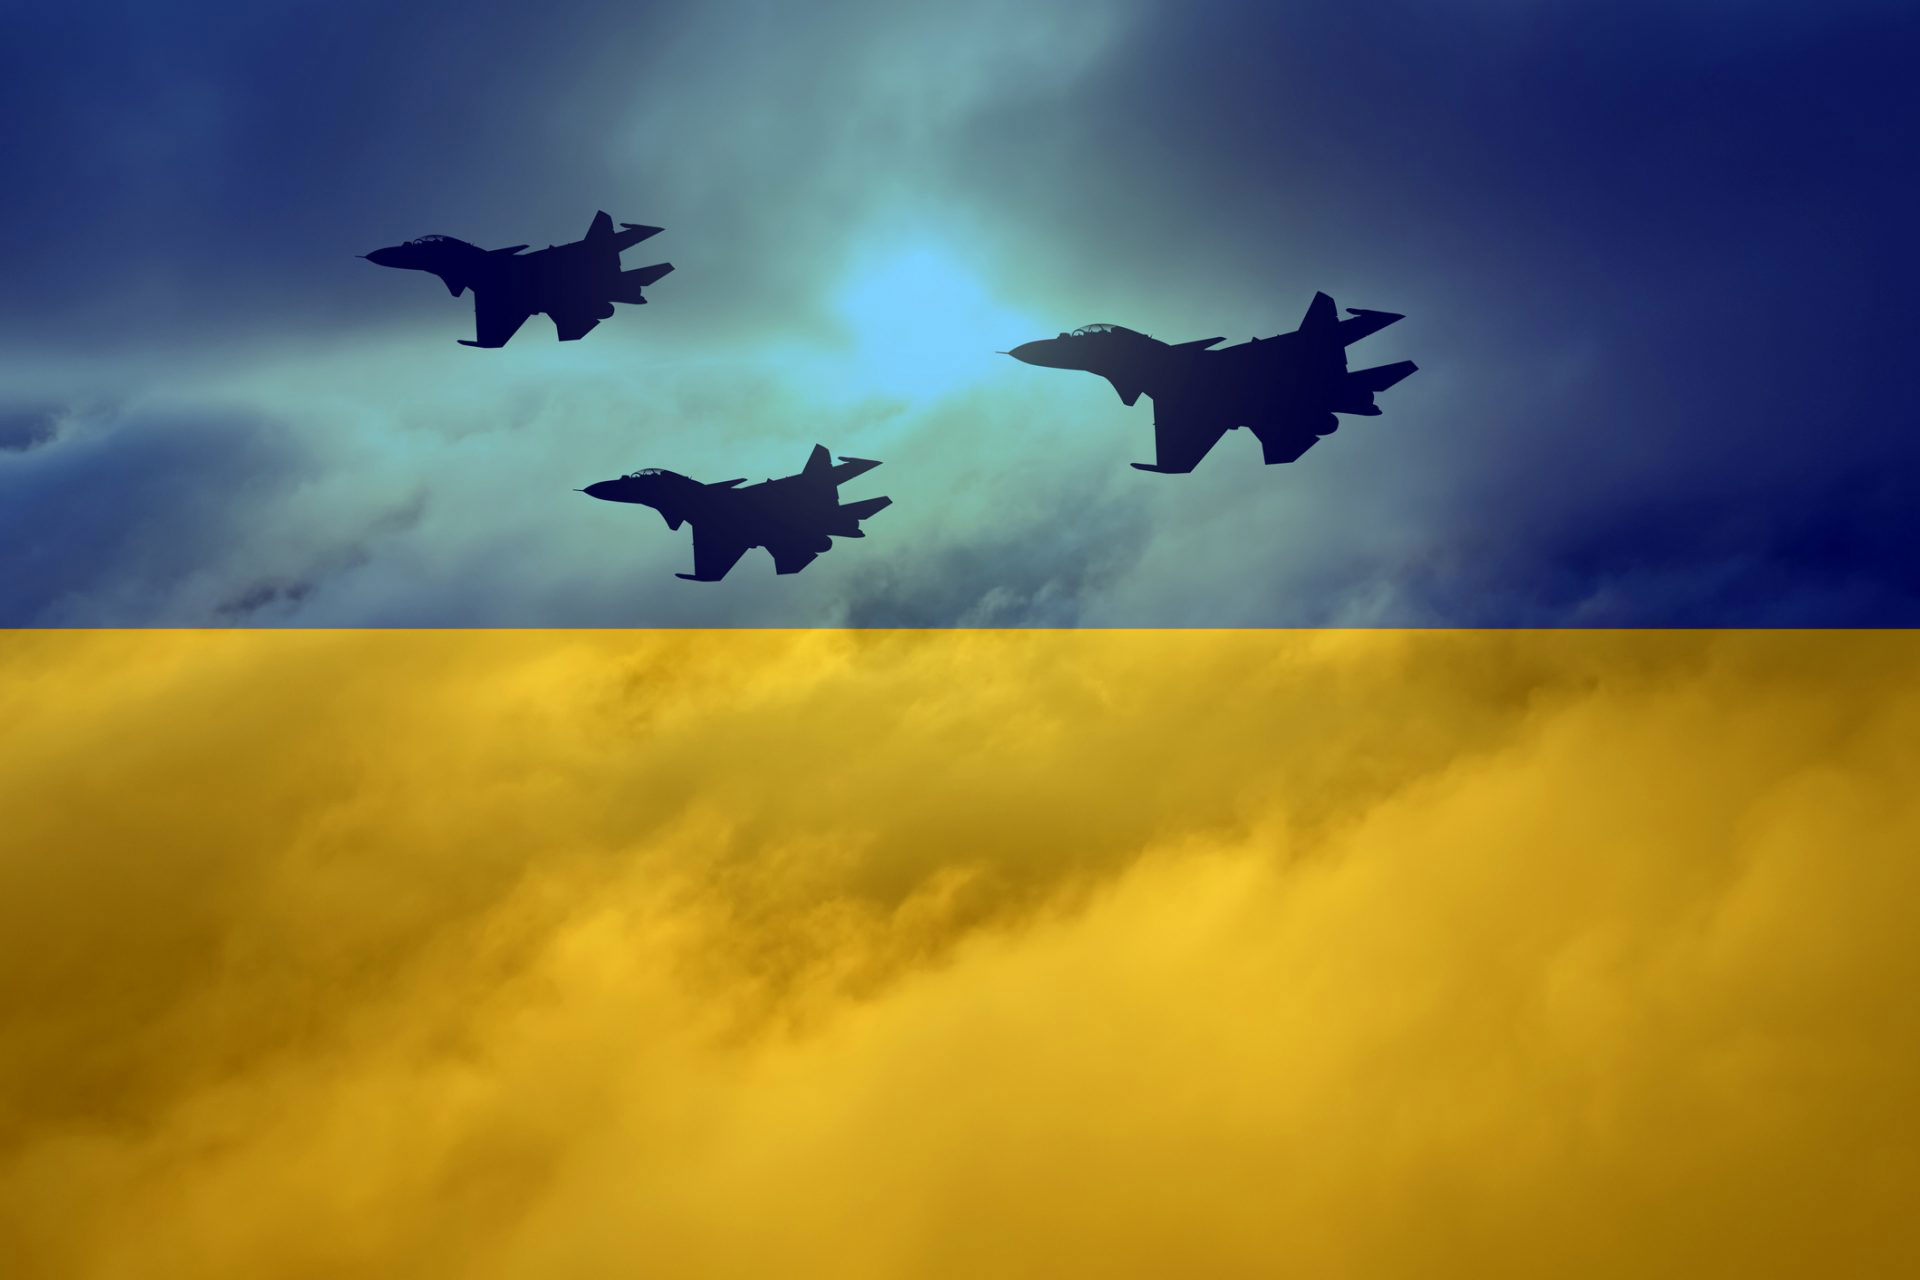 Ukrainian Air Force on X: Ukrainian Su-25 pilots. Boldness always